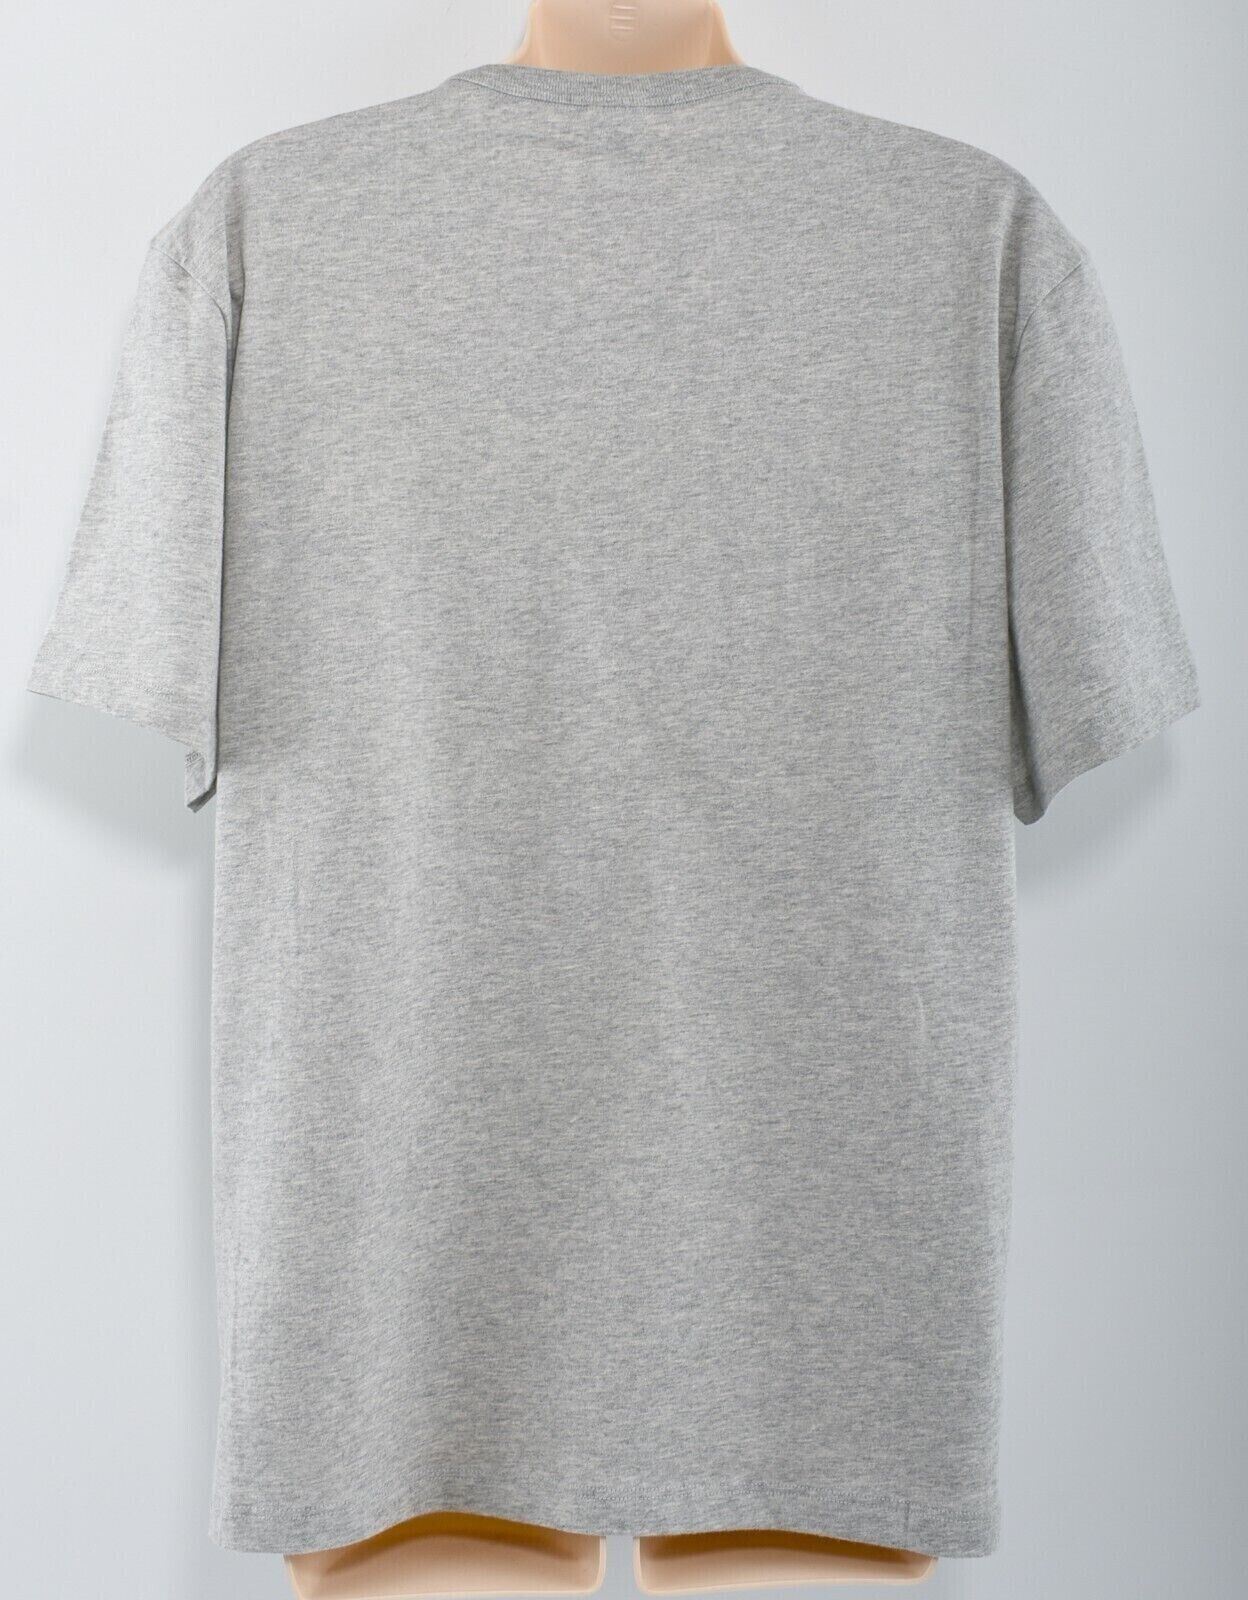 CALVIN KLEIN Women's Lounging / Sleepwear T-shirt, Grey Heather, size S (UK 10)